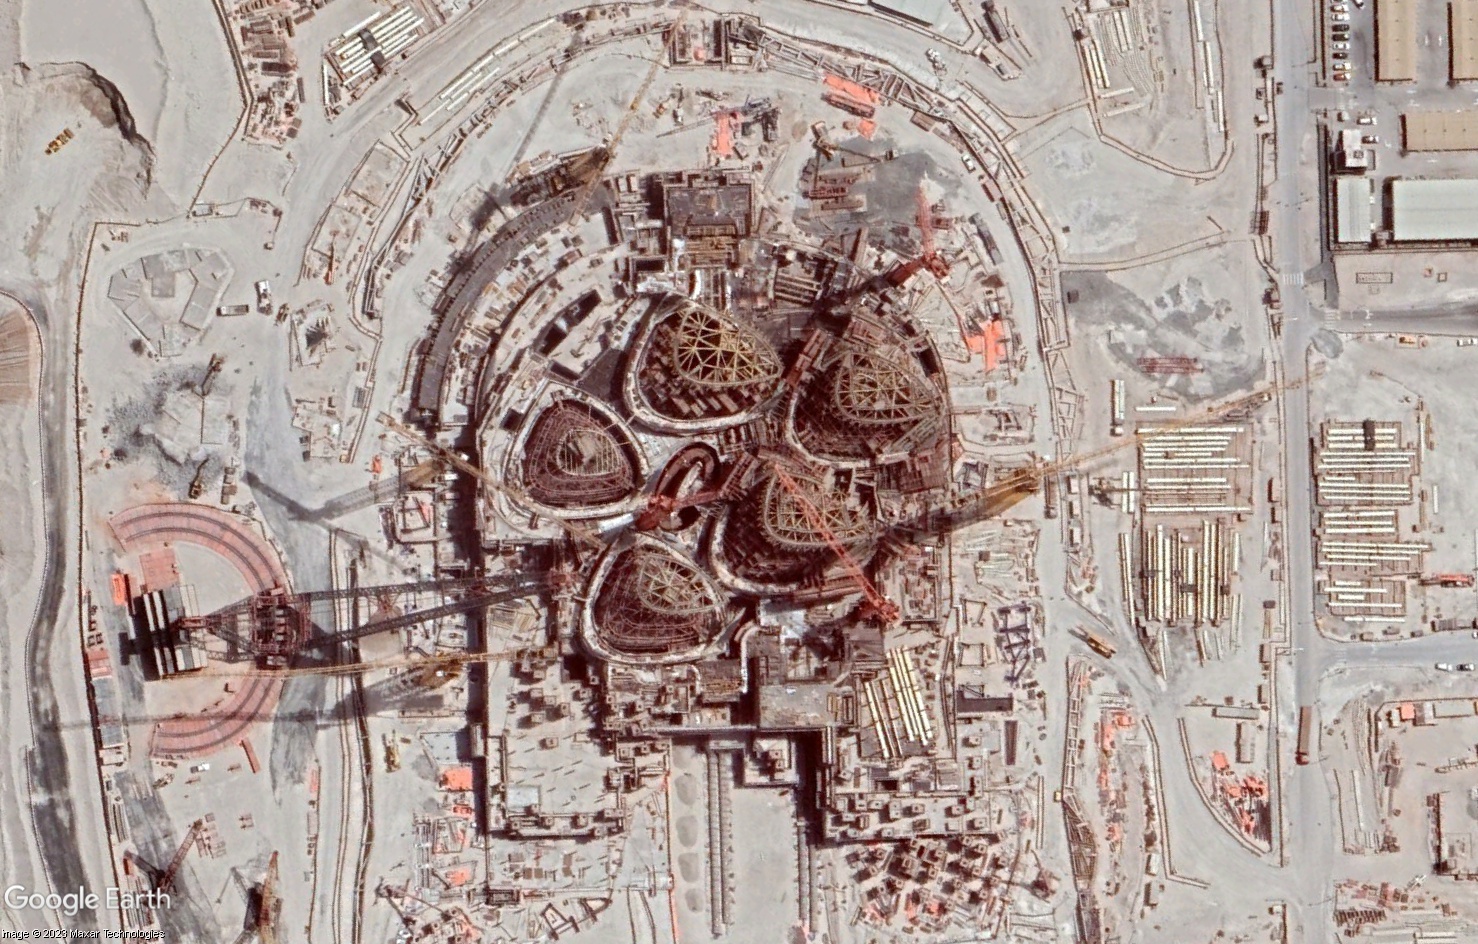 [Bientôt visible sur Google Earth] Le " Zayed National Museum" - Abu Dhabi - Emirats Arabes Unis. Tsge4324